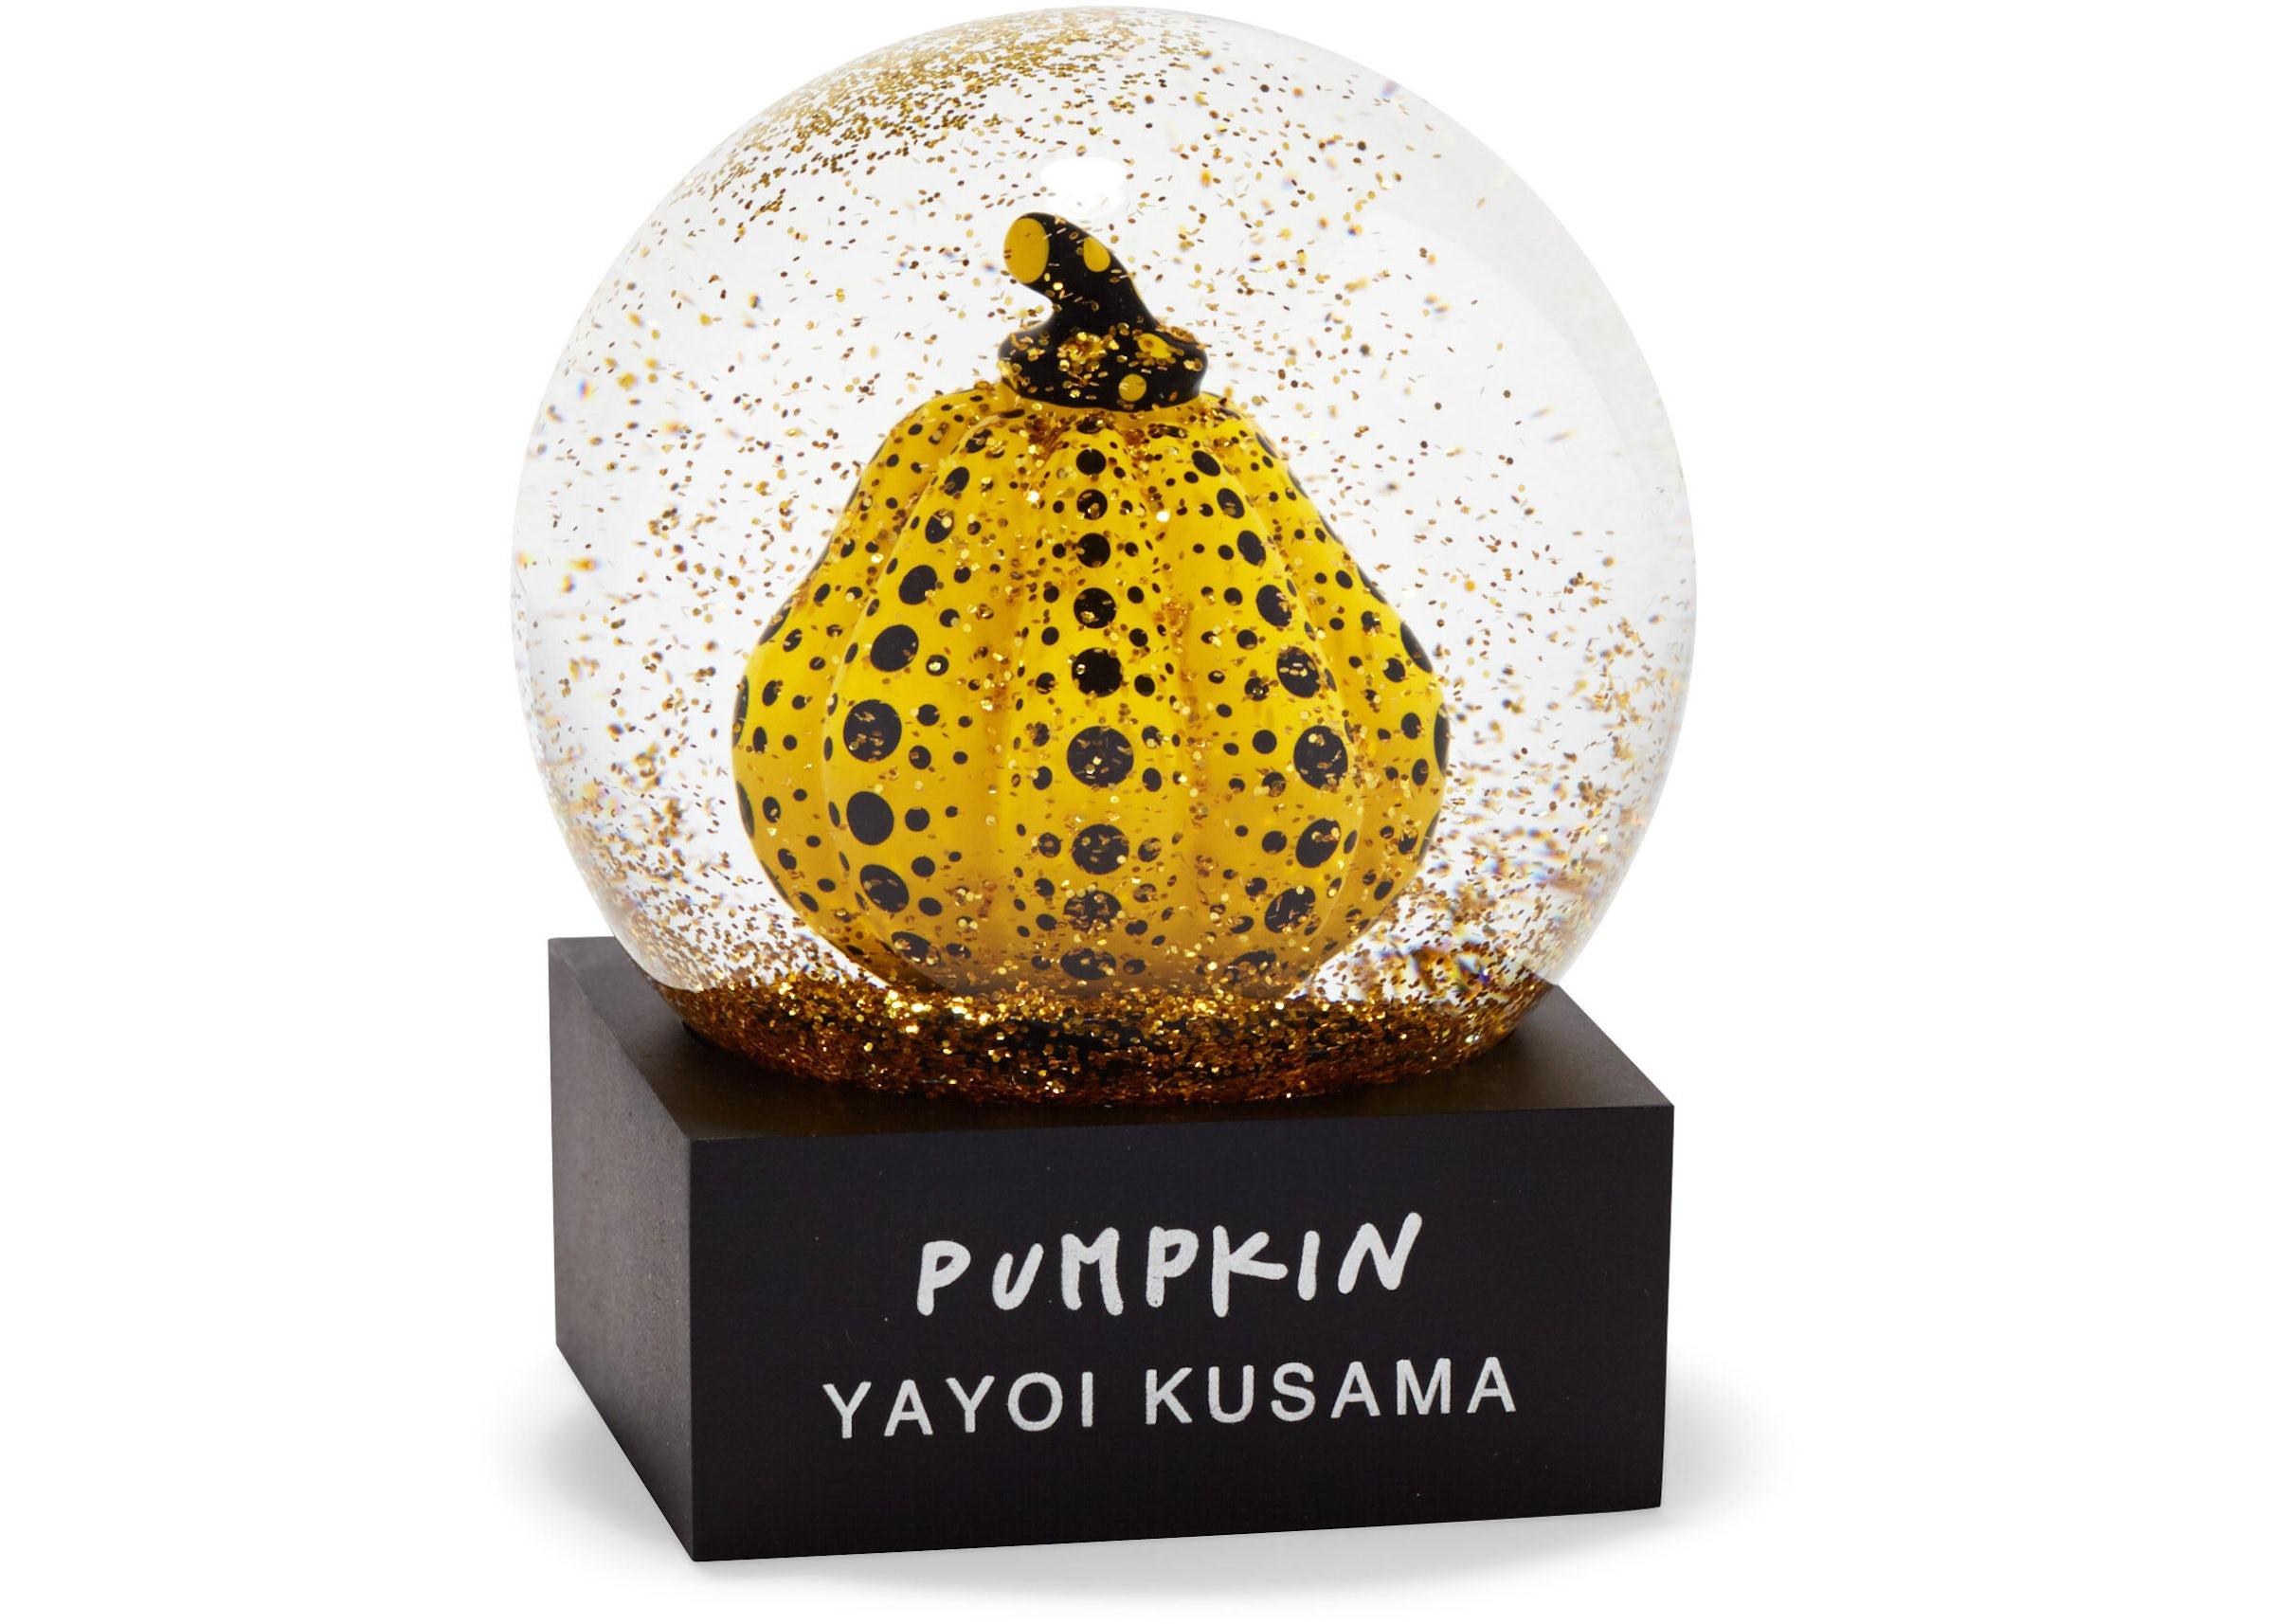 Ever Wondered How Yayoi Kusama Developed Her Pumpkin-Passion